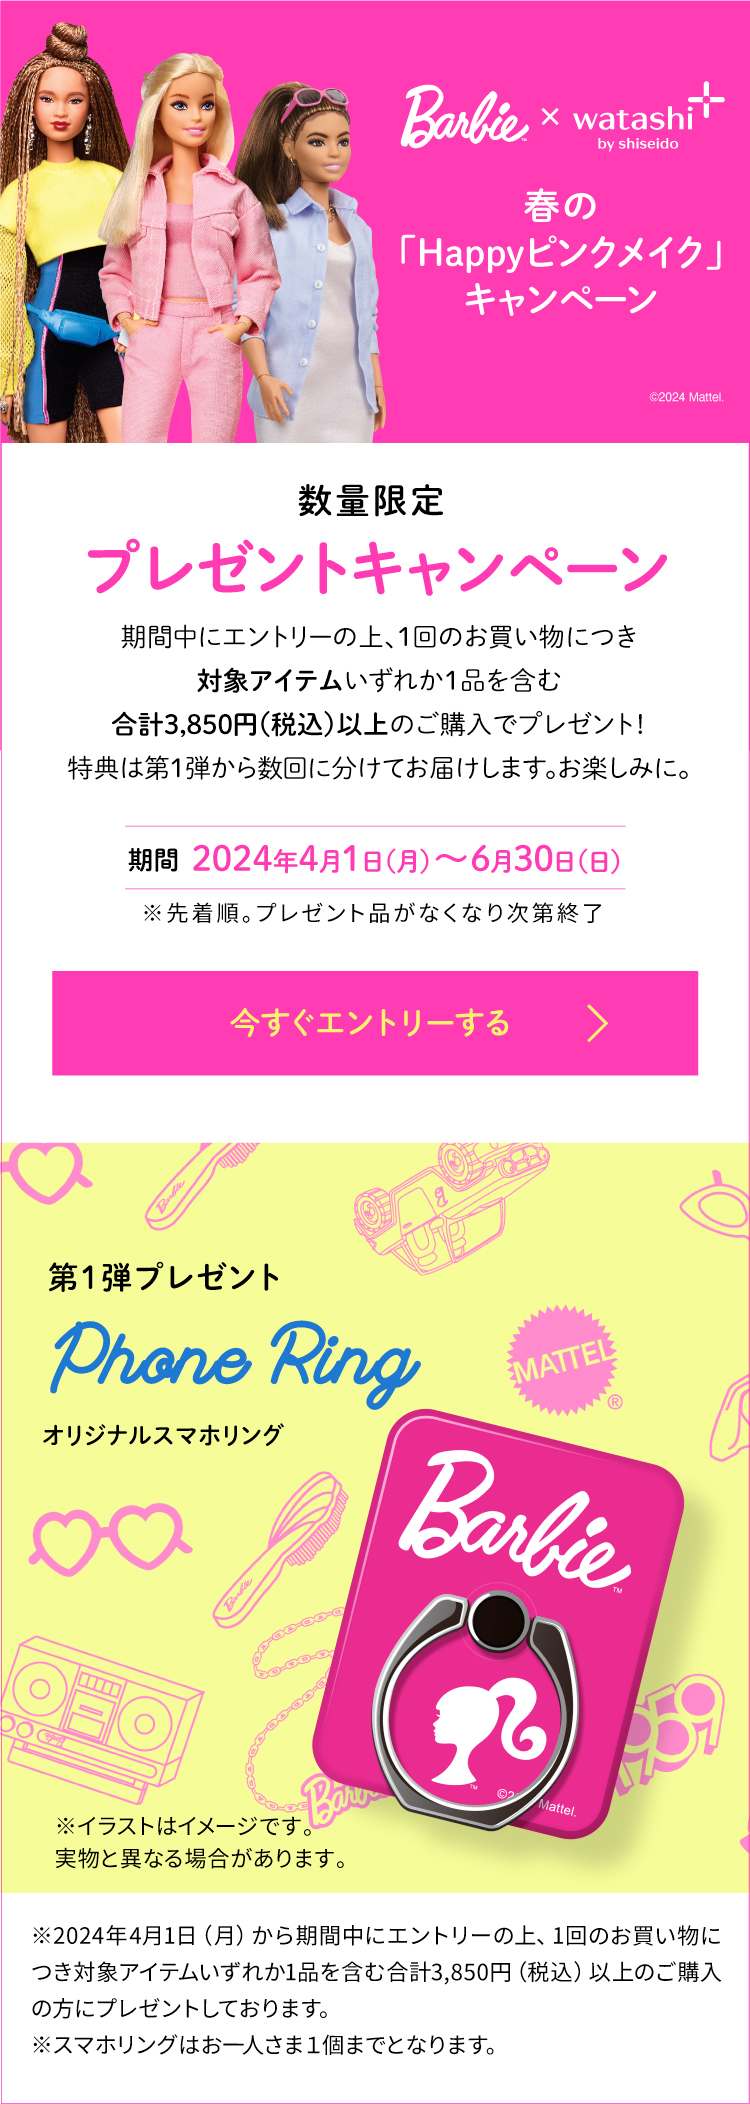 Barbie x watashi+ 春の「Happy ピンクメイク」キャンペーン